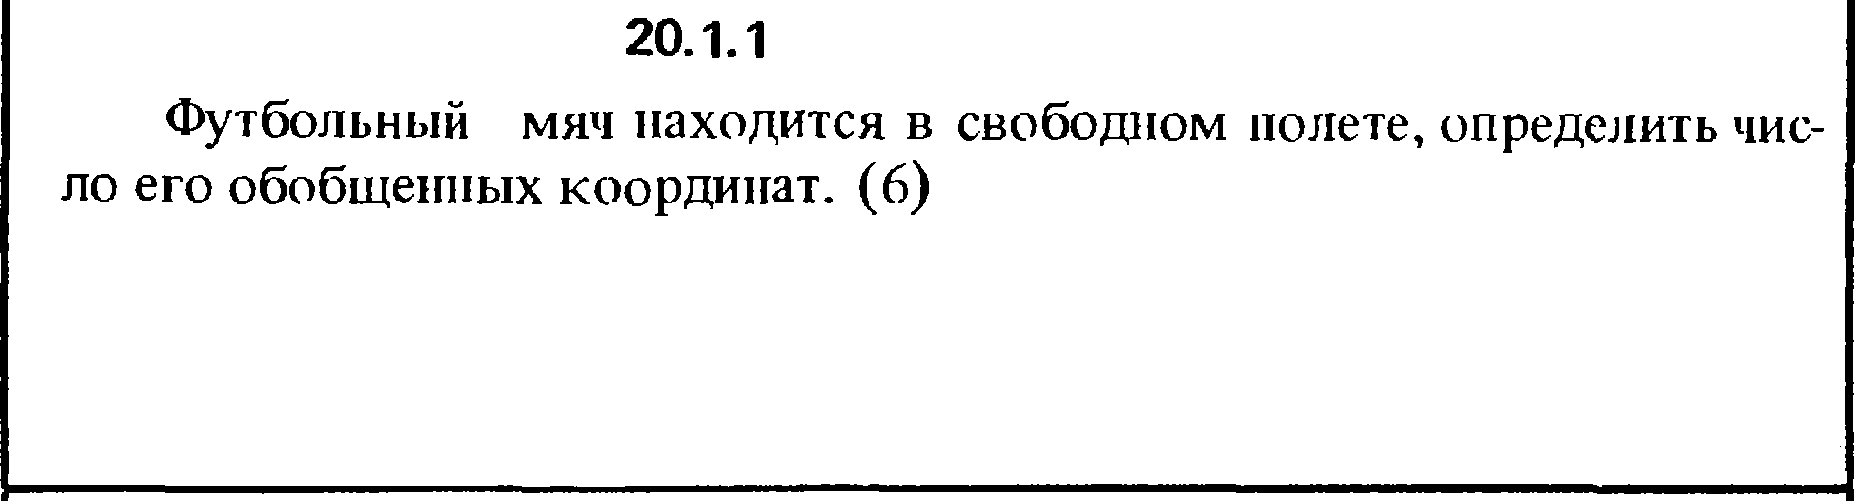 Решение 20.1.1 из сборника (решебника) Кепе О.Е. 1989